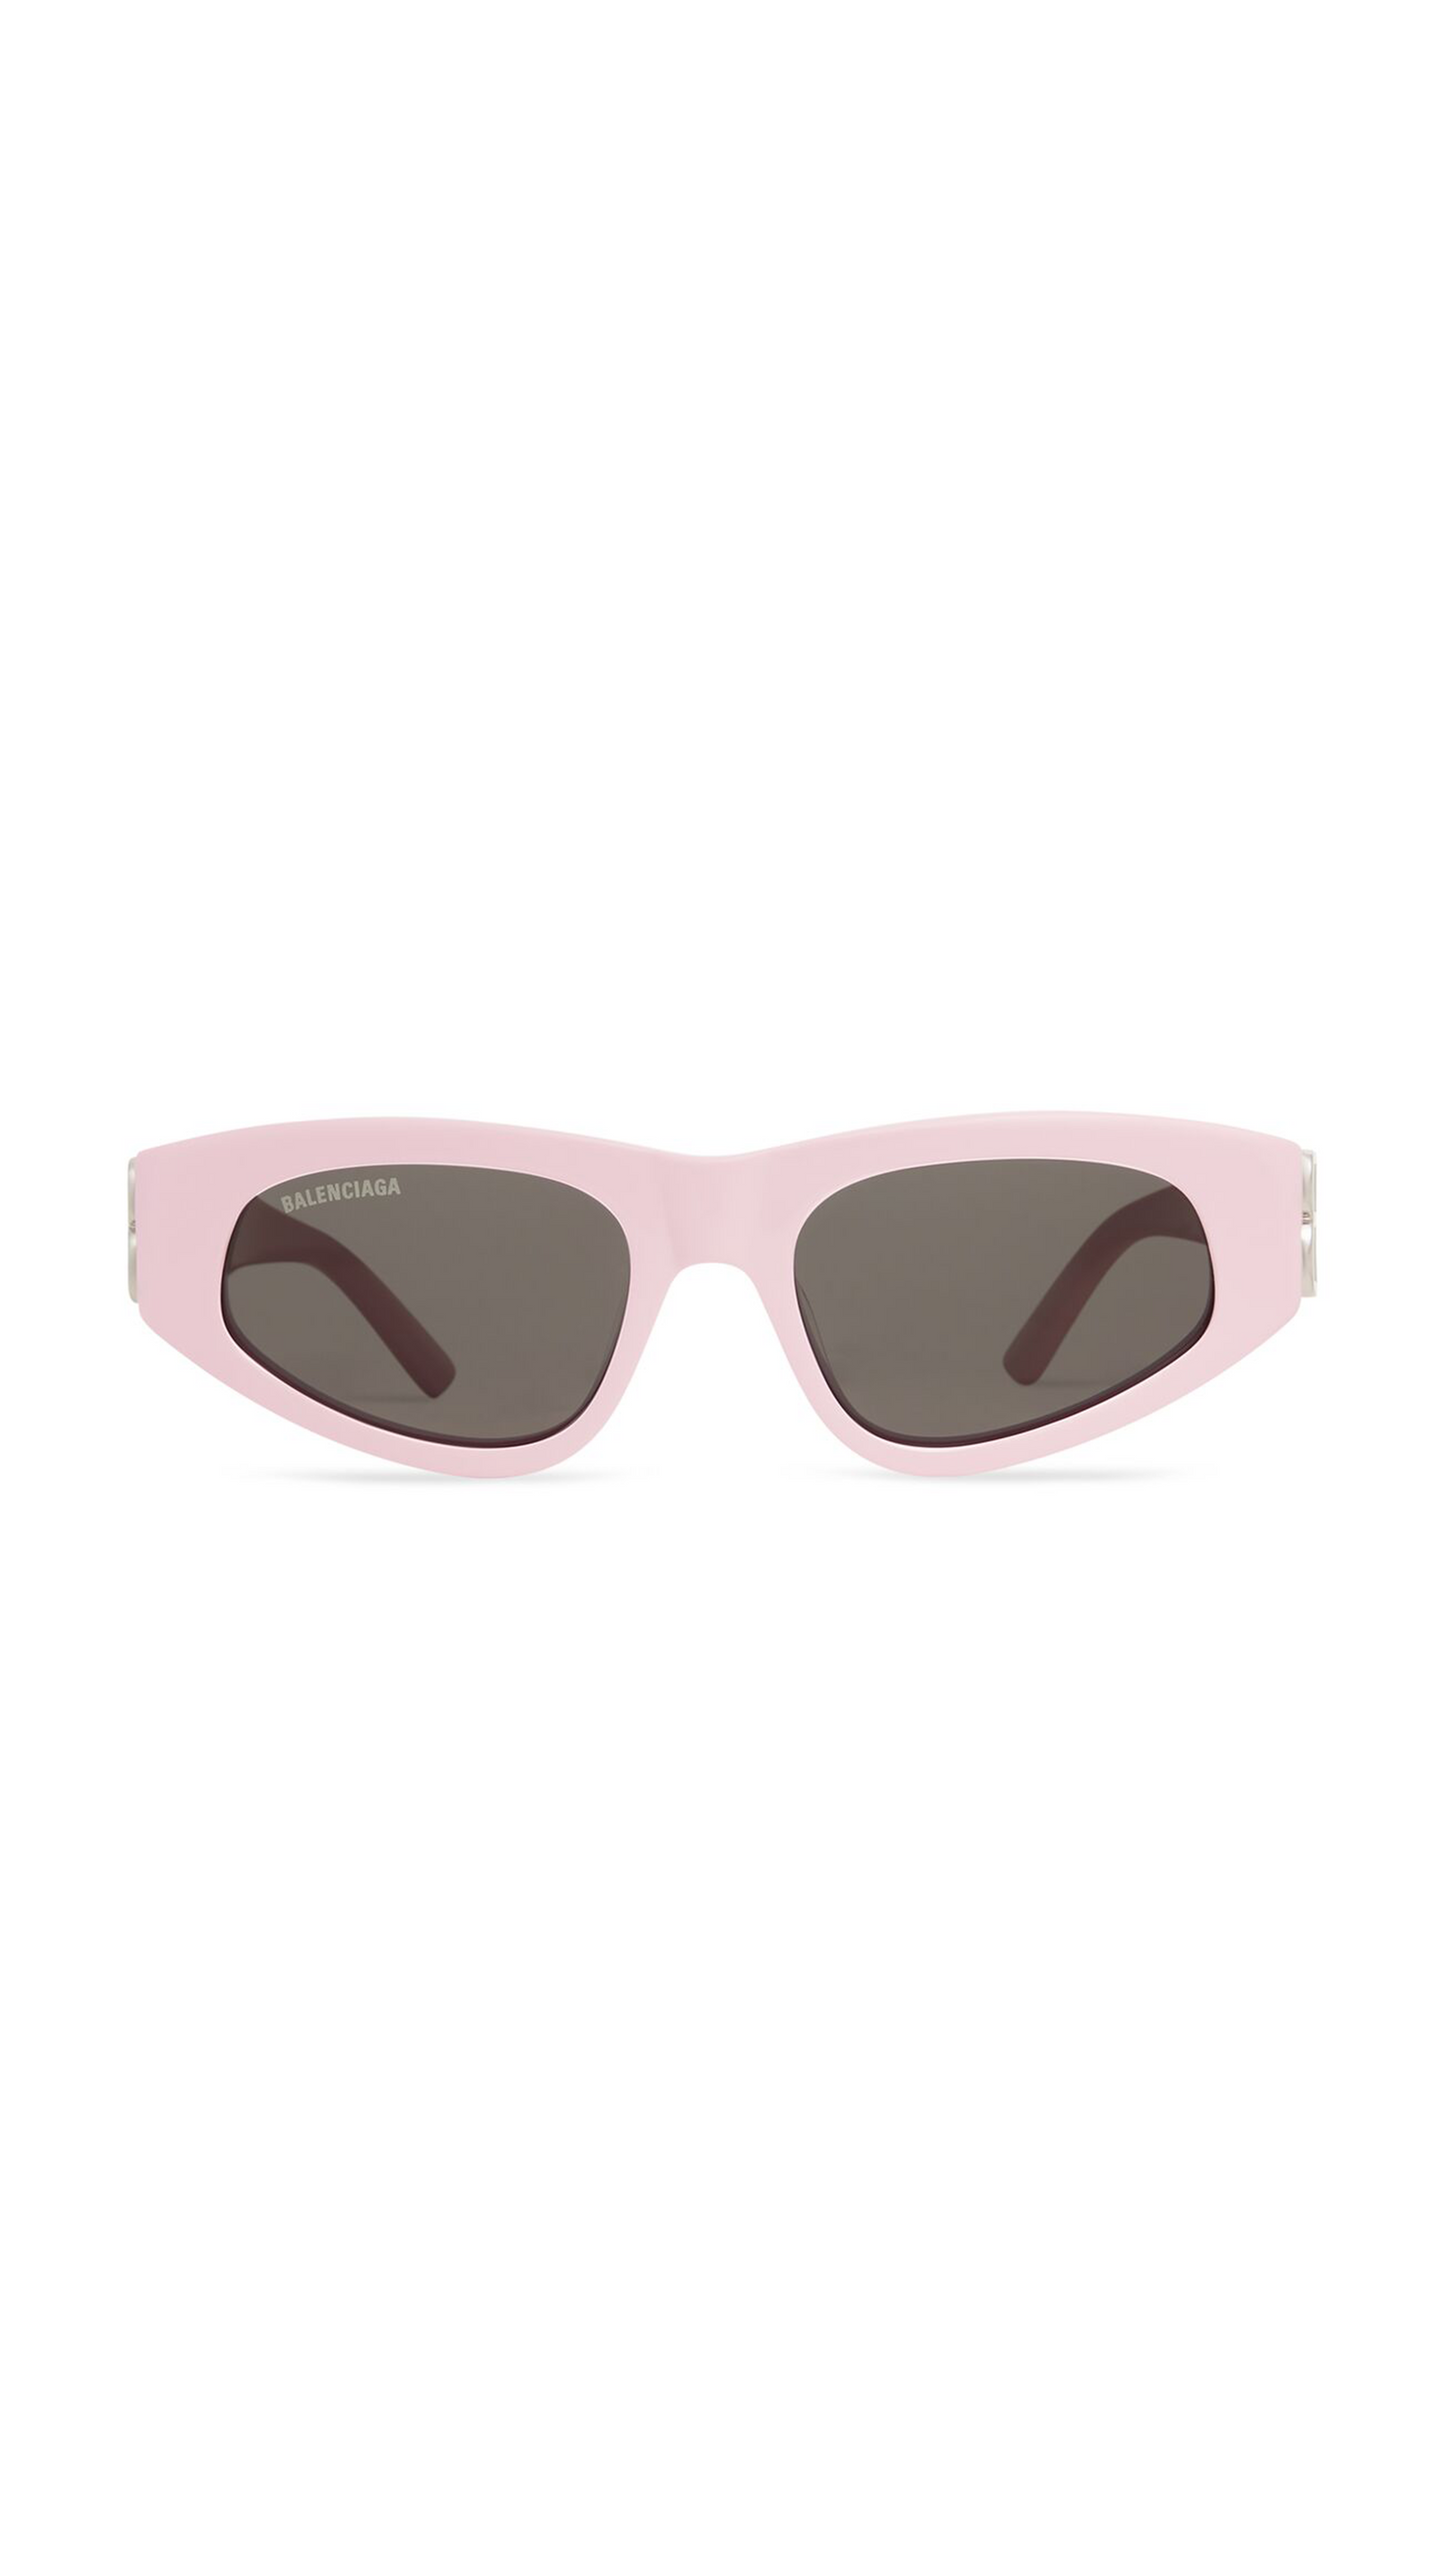 Dynasty D-frame Sunglasses - Pink Acetate